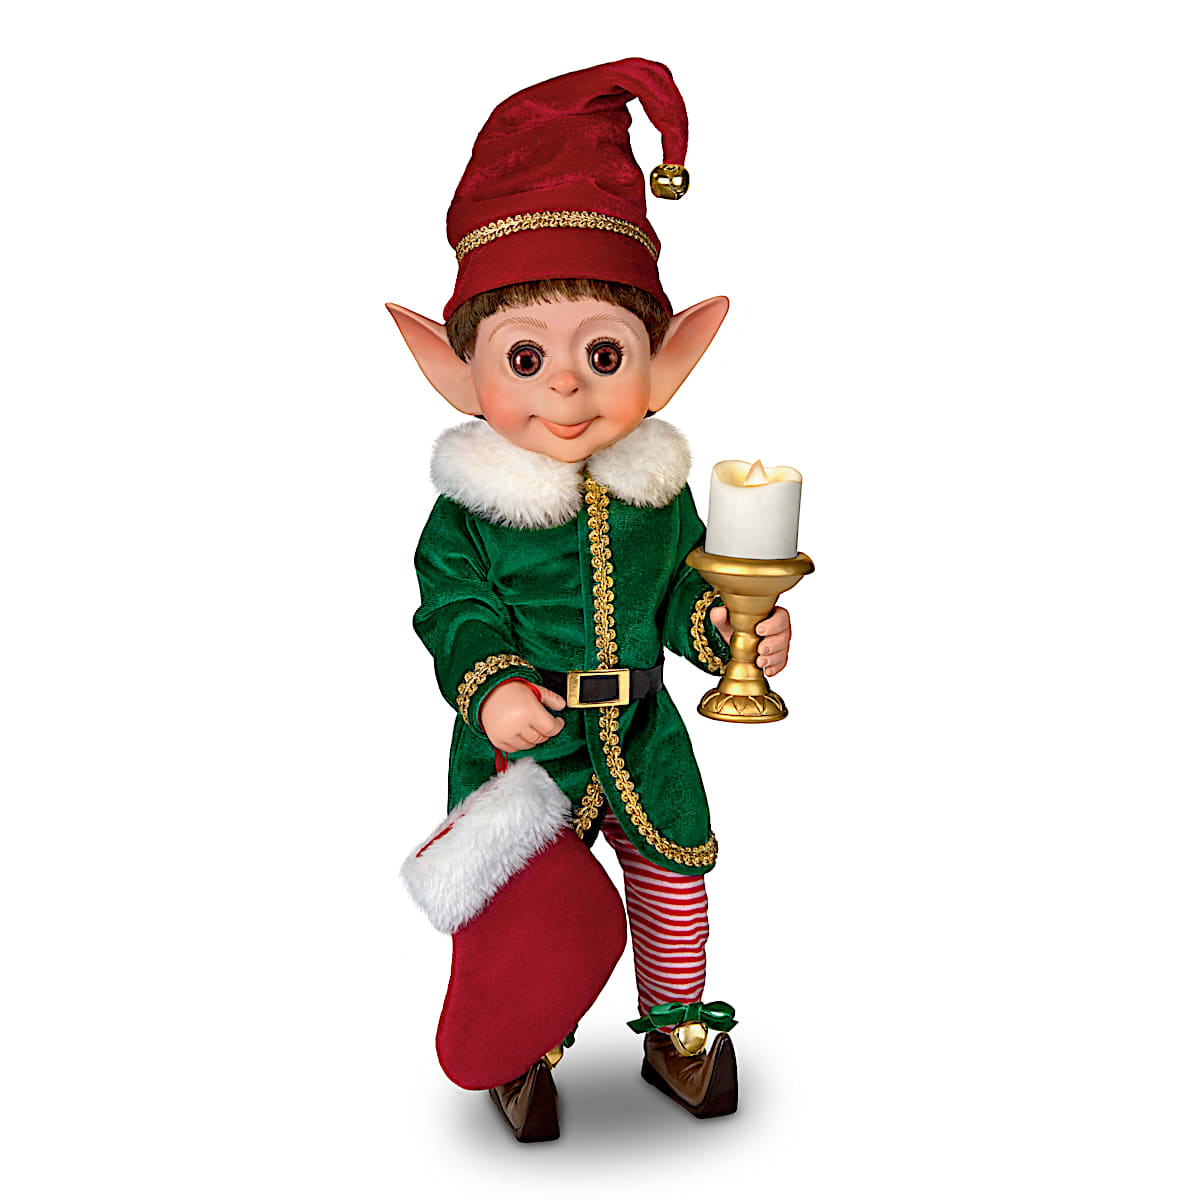 https://media.ashtondrake.com/images/d_adg_defaultImage.png/w_1200,h_1200,q_auto,f_auto,dpr_1,e_sharpen:100/ashton-drake/0303142001/Charlie-The-Christmas-Elf-Doll-With-An-Illuminating-Candle